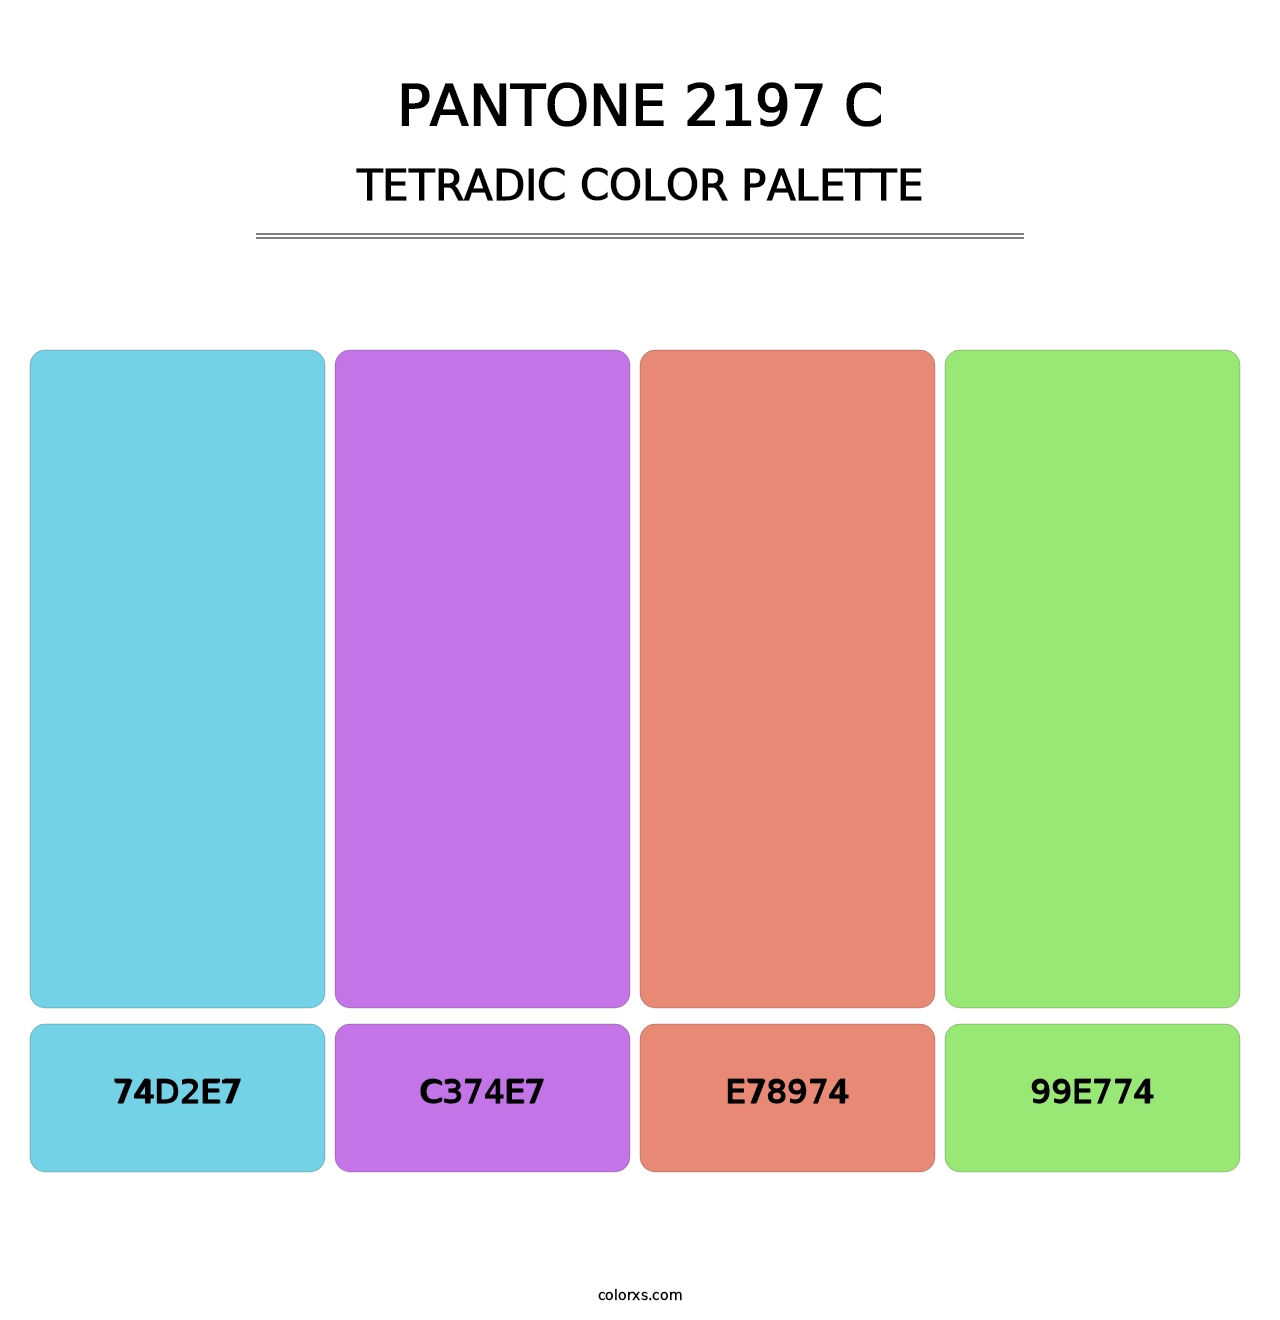 PANTONE 2197 C - Tetradic Color Palette